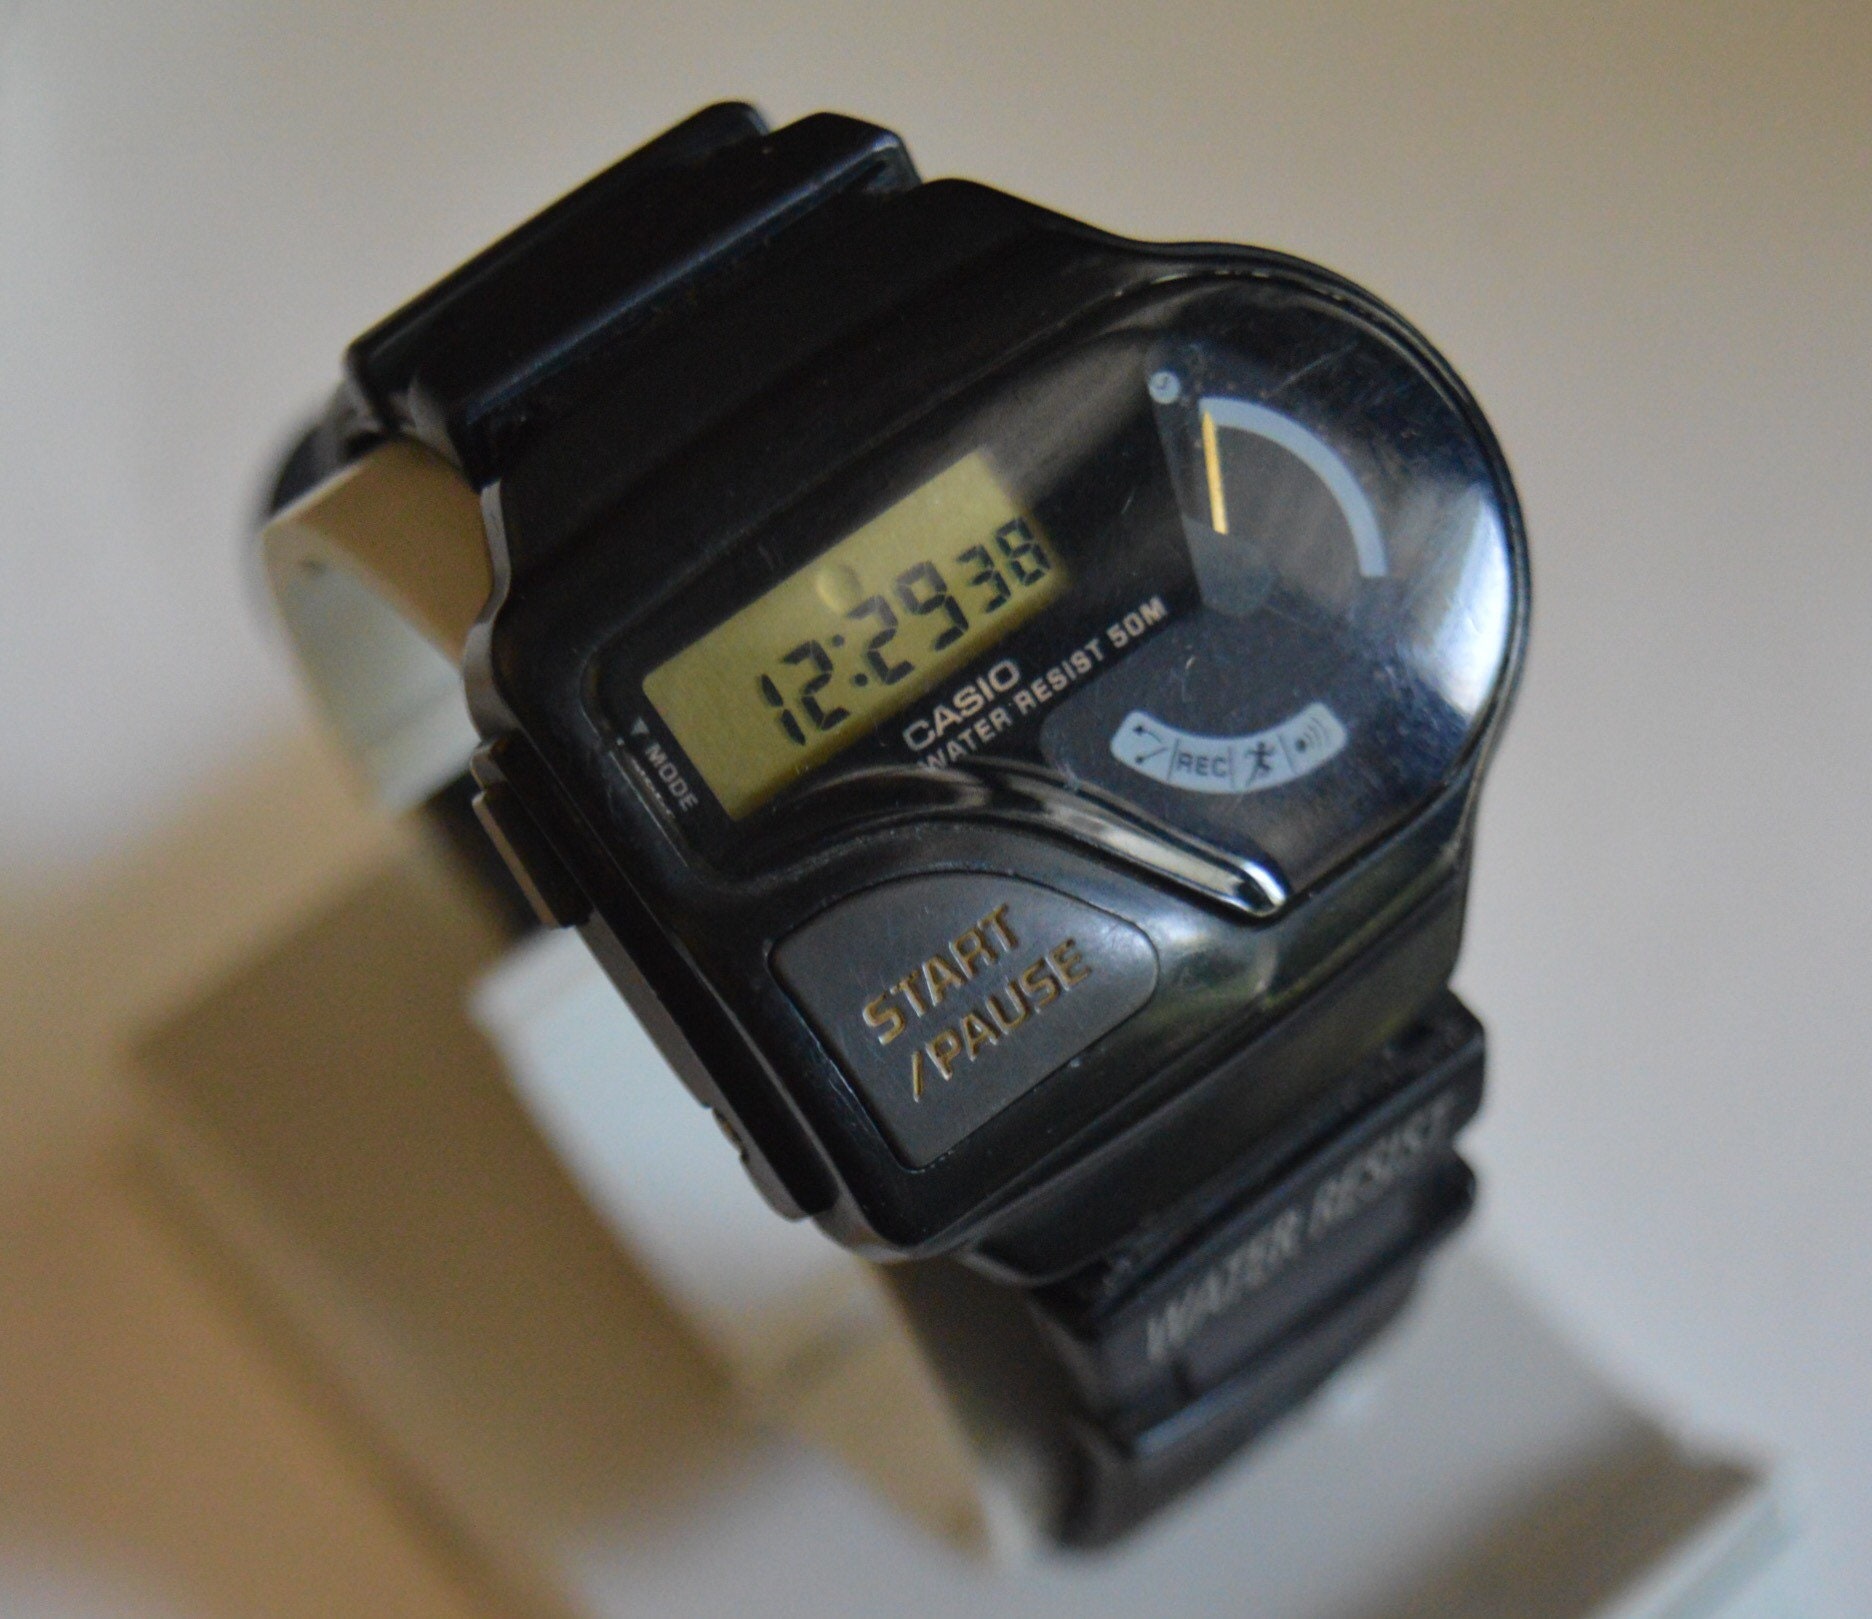 Casio WM-11 Vintage Digital Watch. Gift Ideas Birthday - Etsy